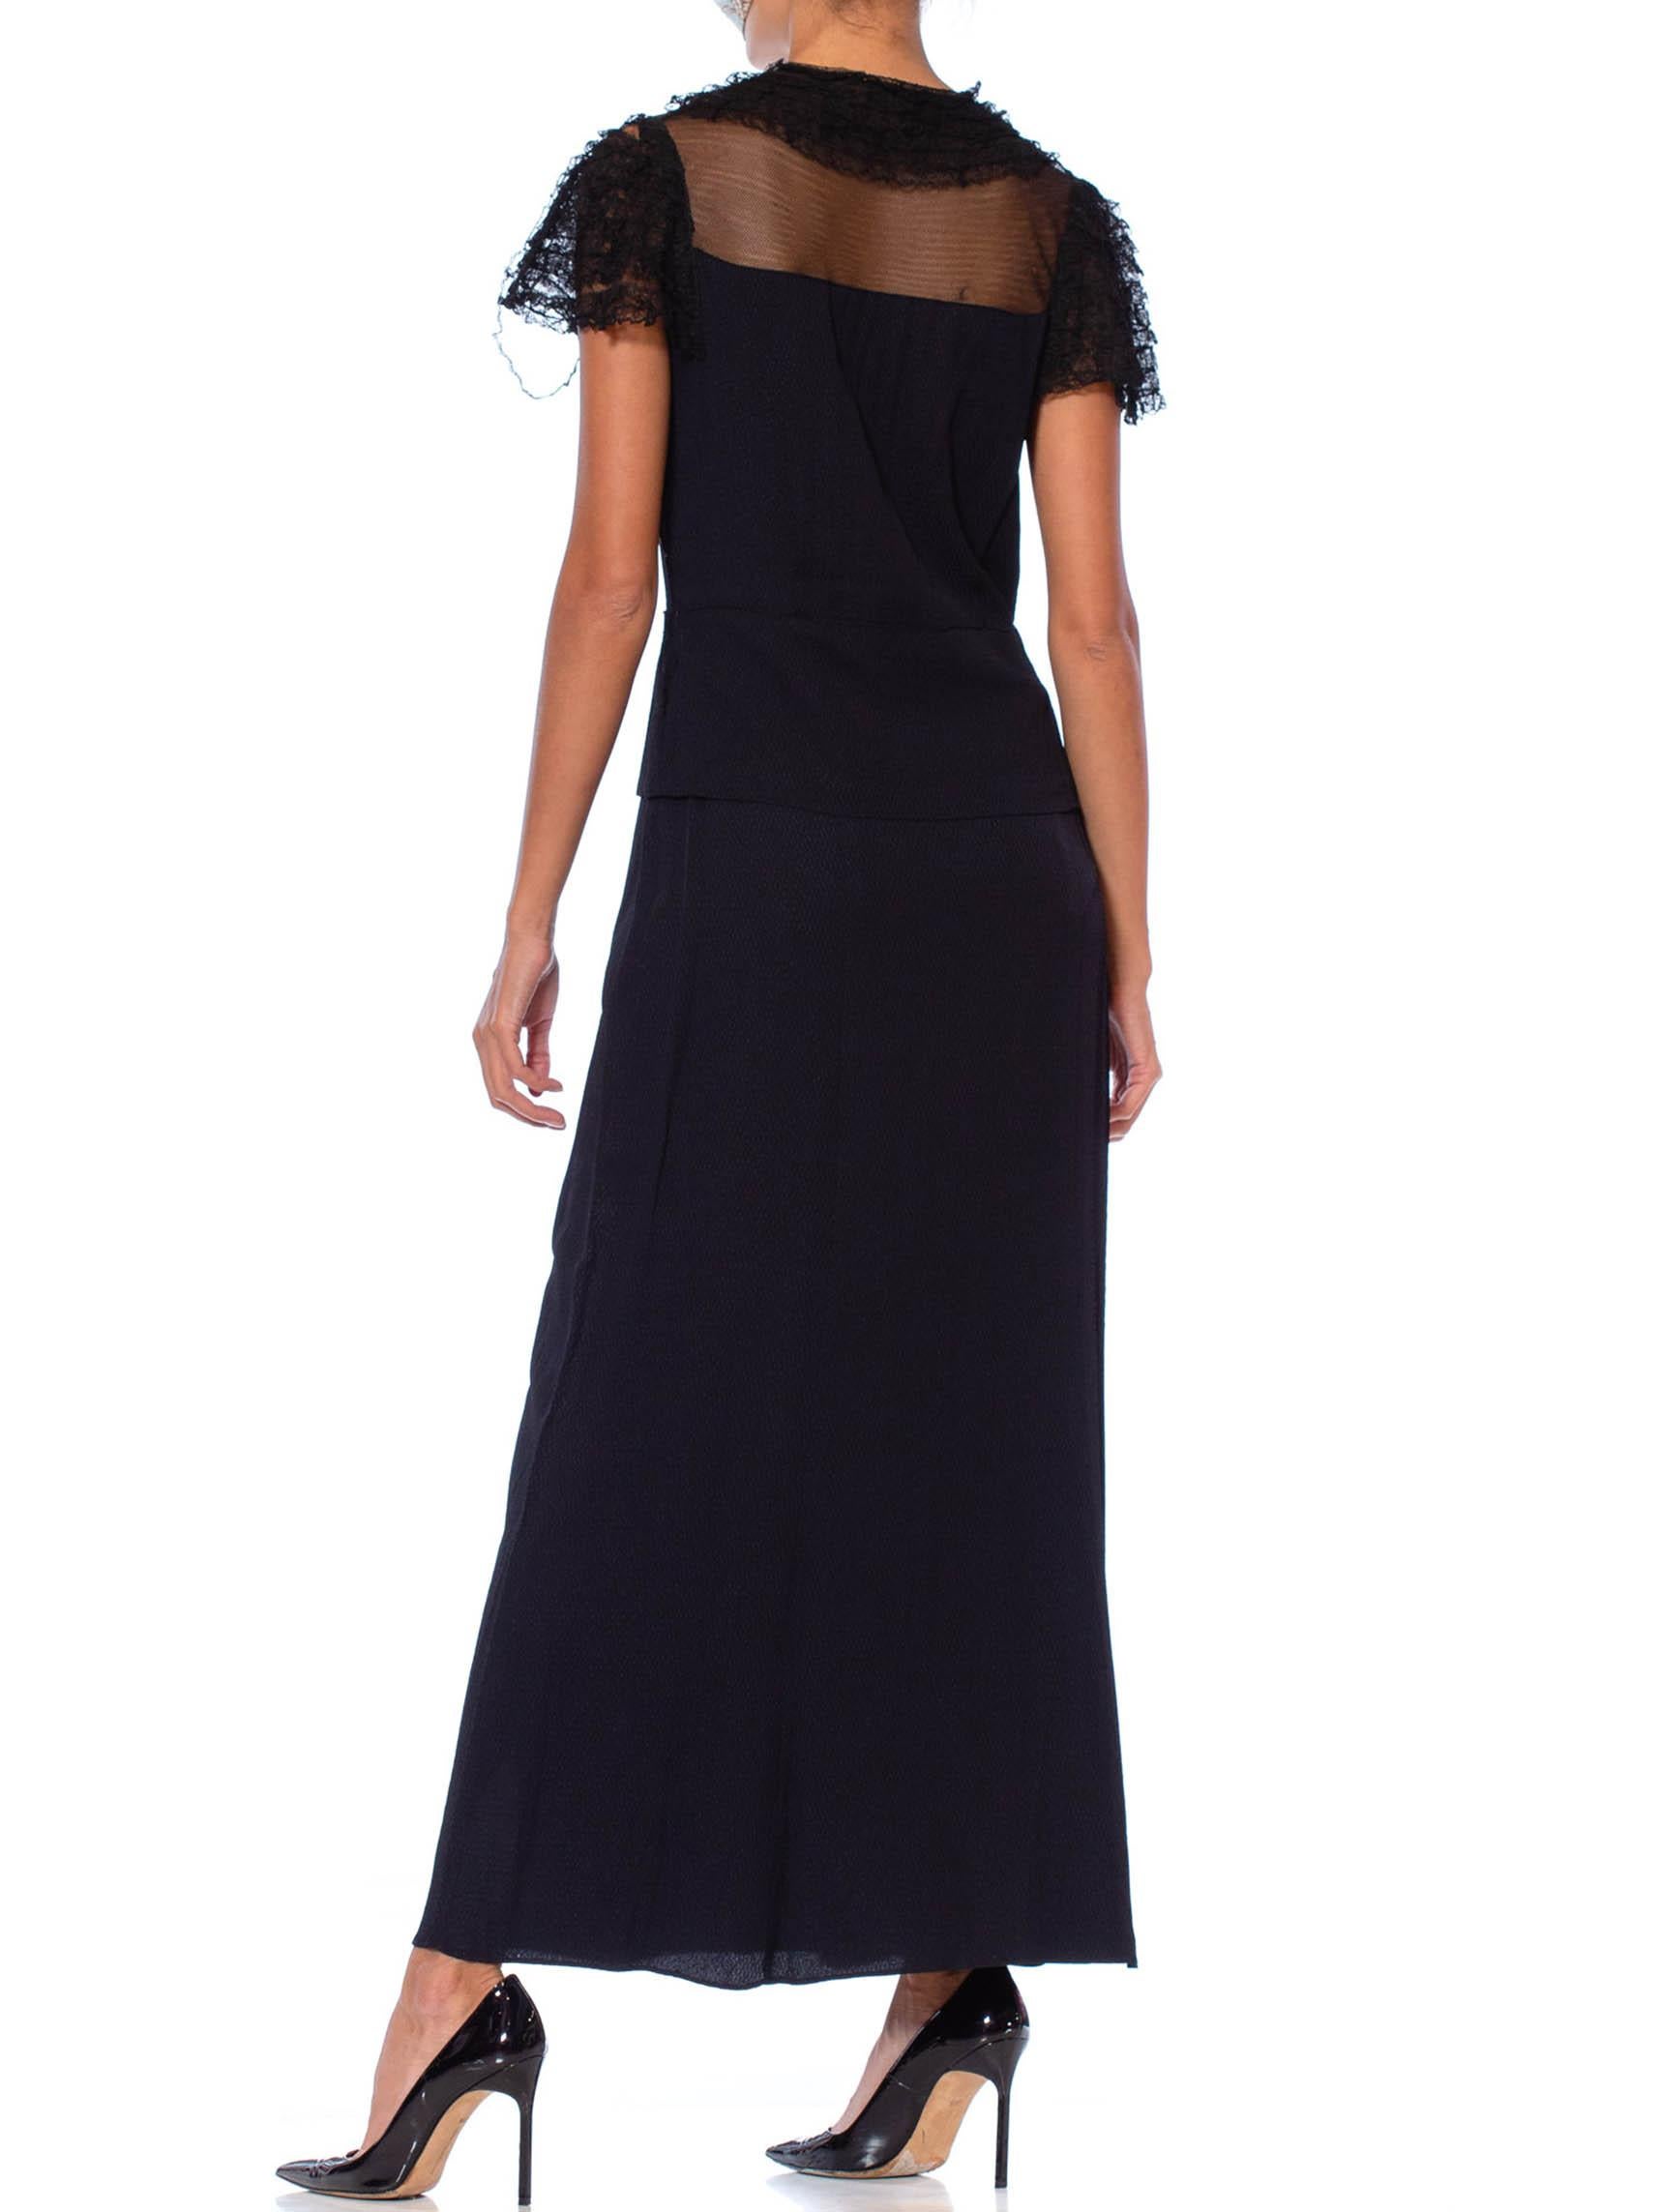 1930S Black Silk Crepe Jacquard Dress With Sheer Net Yoke & Lace Ruffle Sleeves For Sale 6